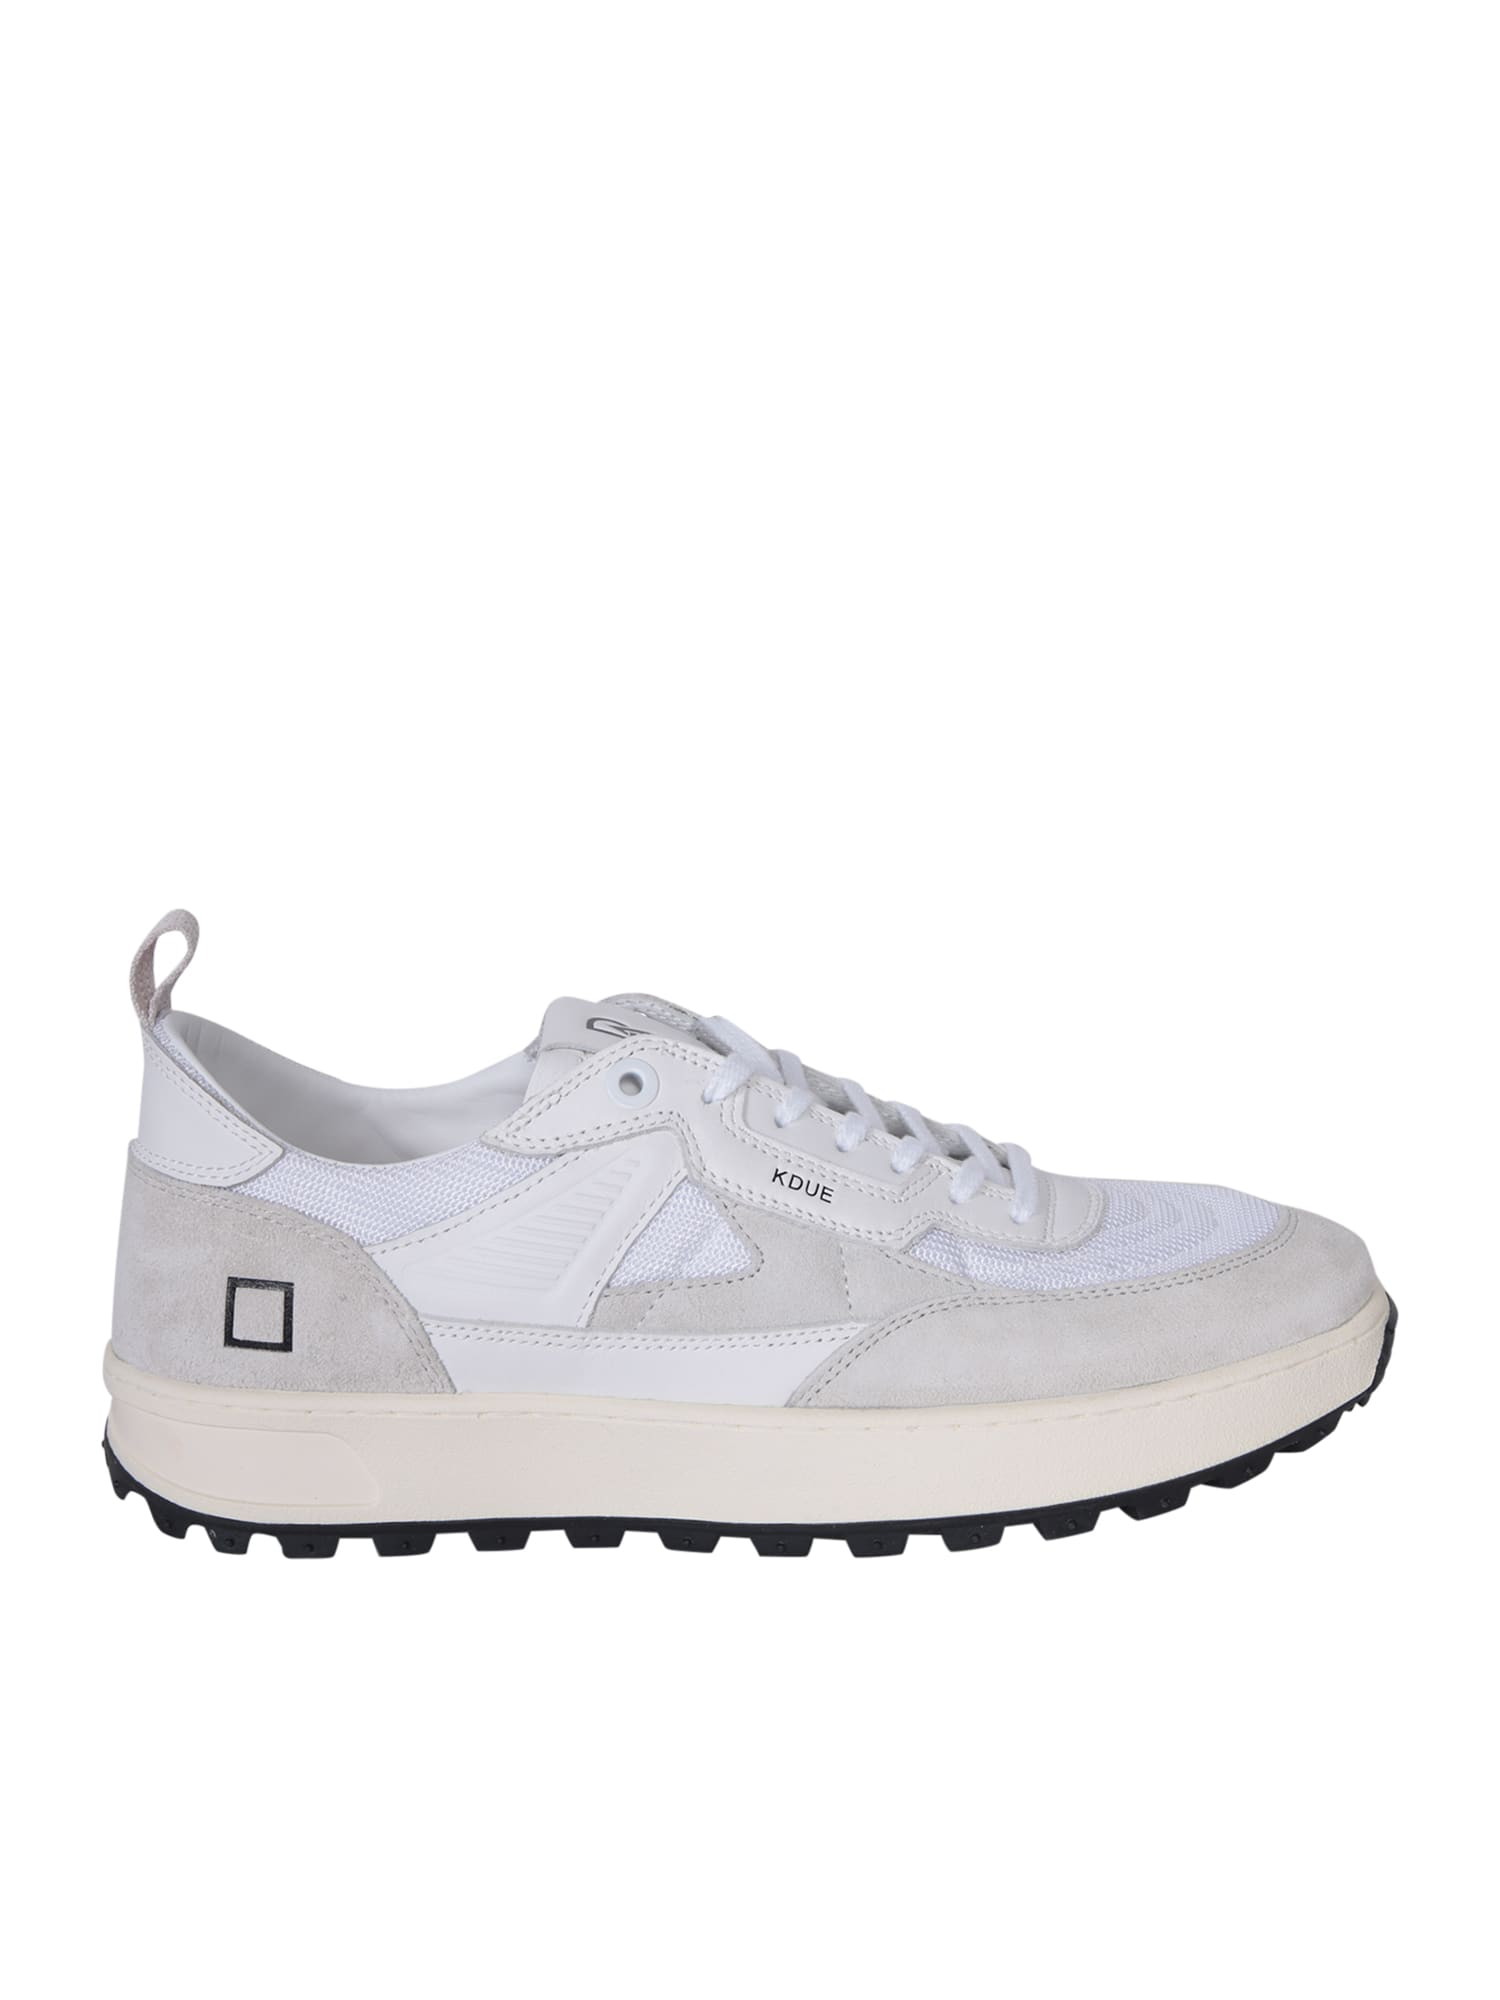 Shop Date D.a.t.e. K2 White Sneakers